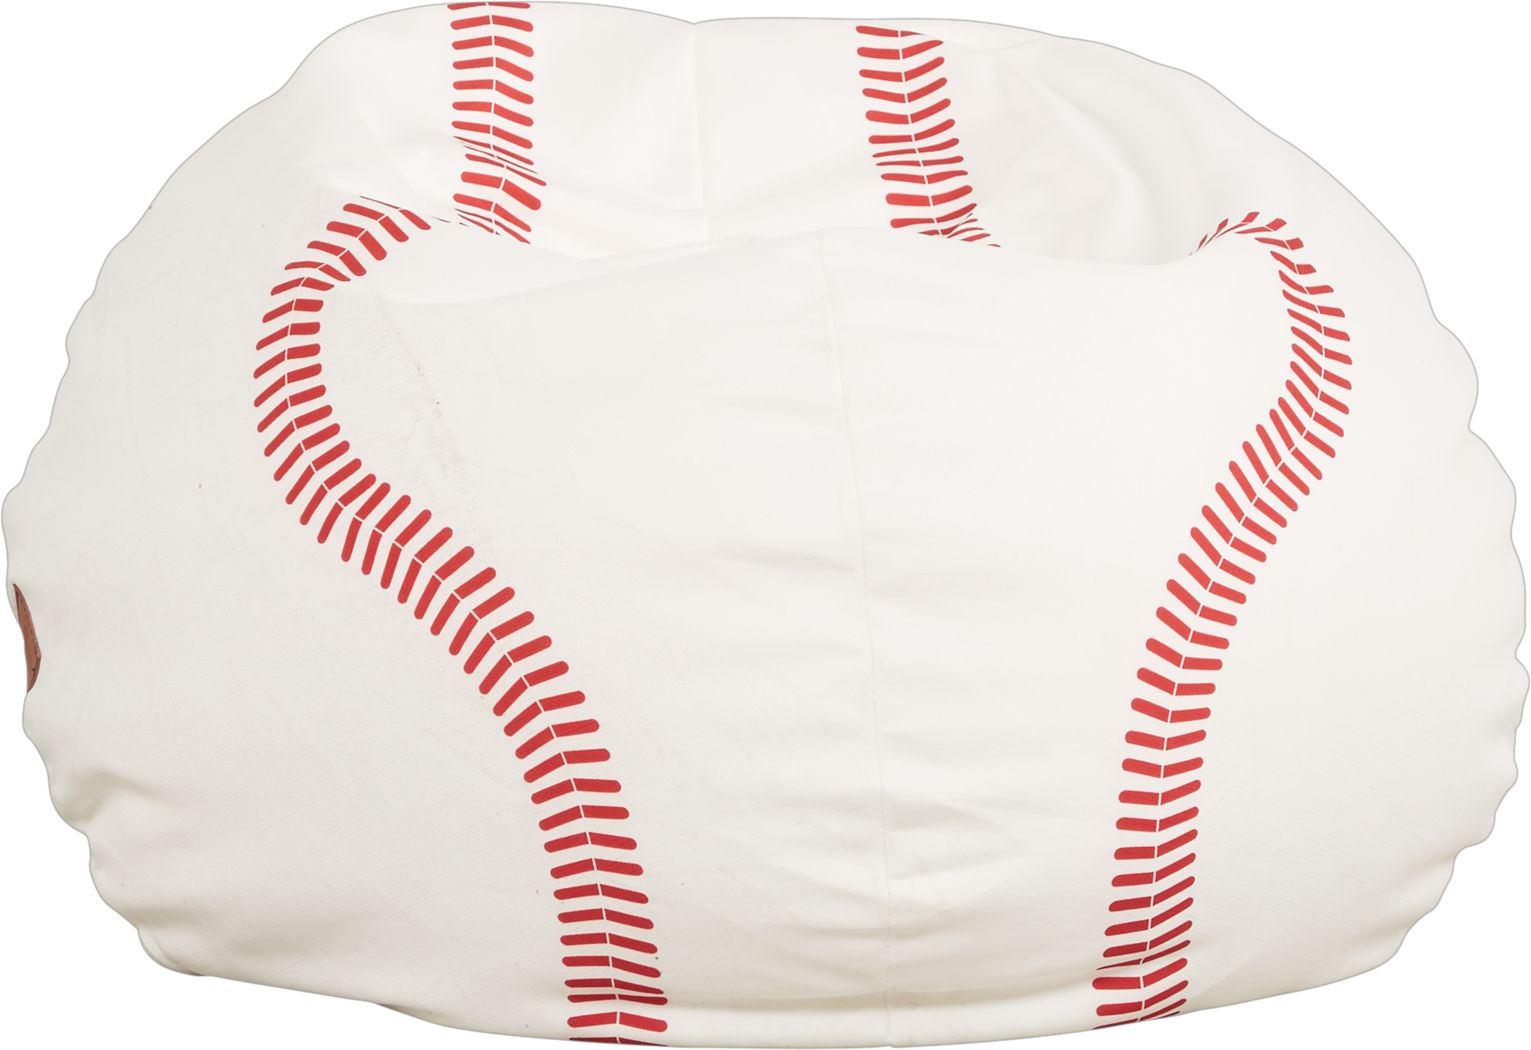 Kids Sports Zone Baseball Bean Bag Chair Rooms To Go